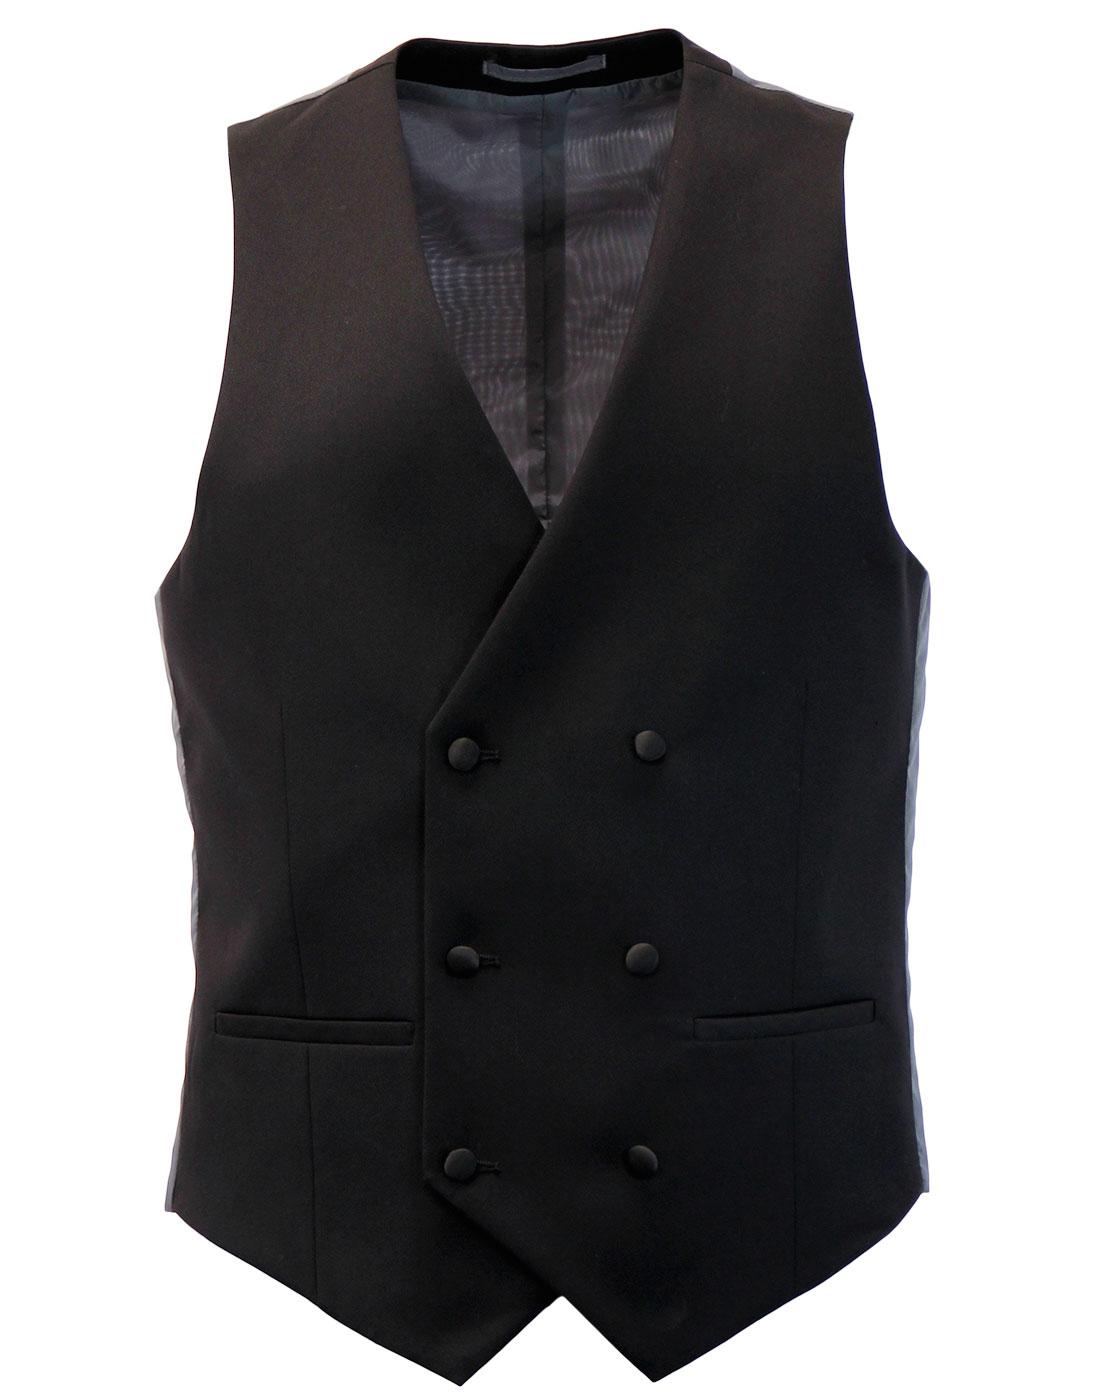 FARAH Sandfield Retro Double Breasted Dinner Suit Waistcoat Black